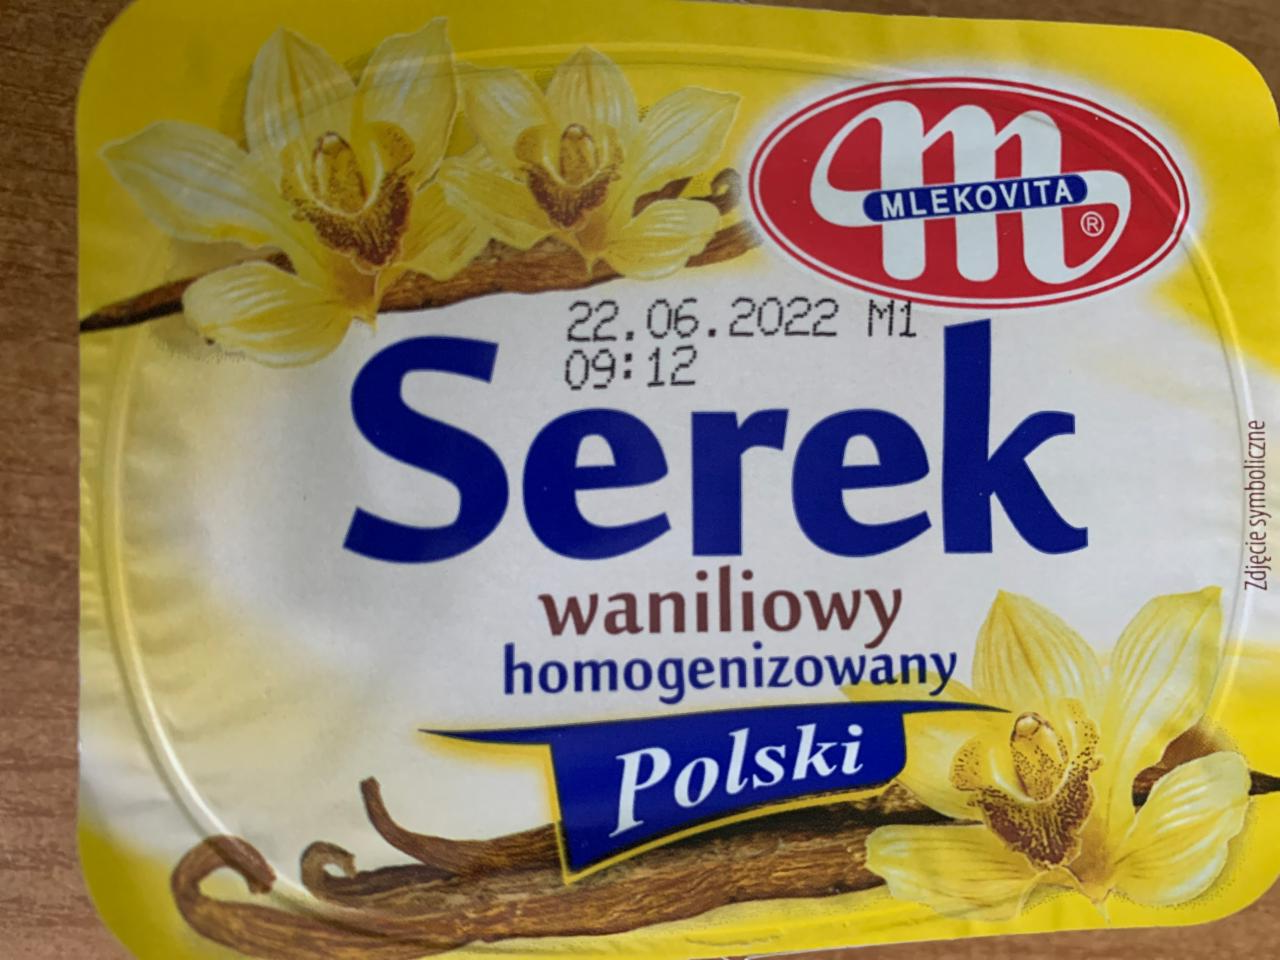 Фото - Serek waniliowy homogenizowany Polski Mlekovita